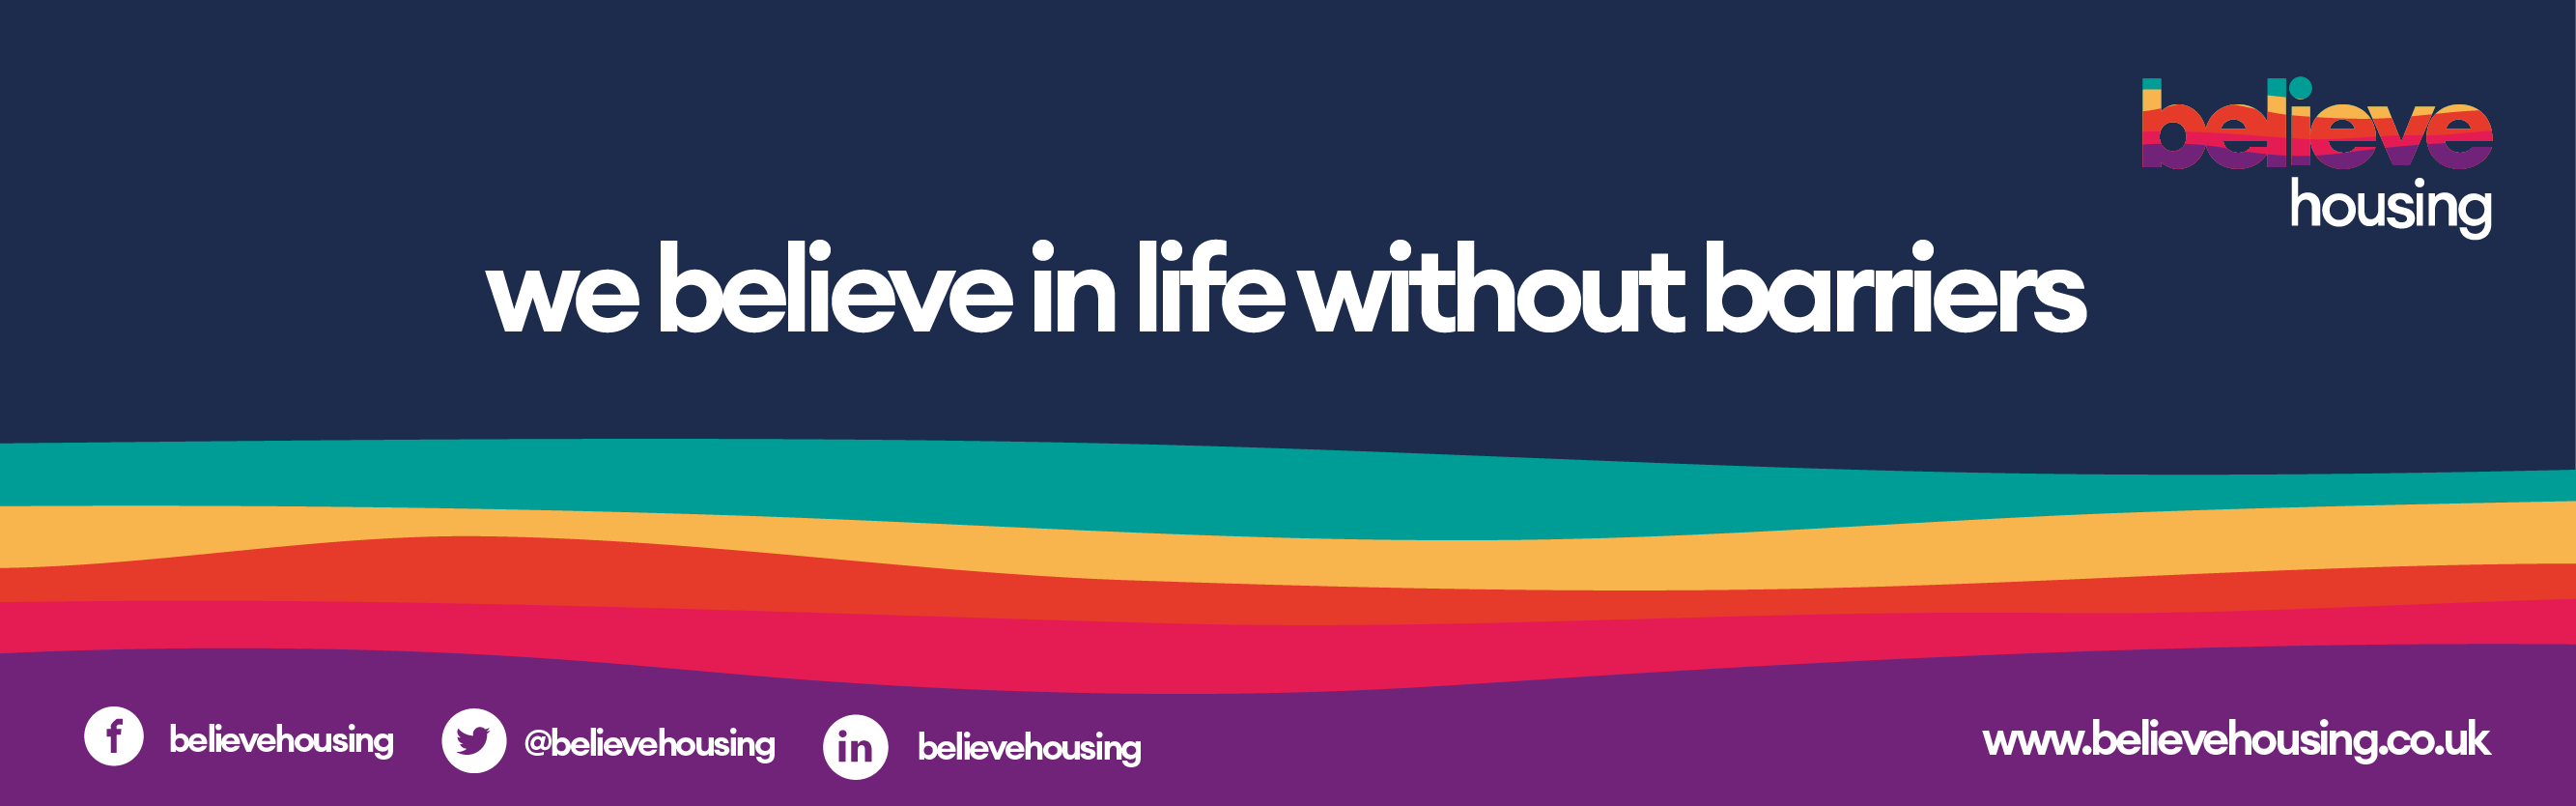 believe housing - advert